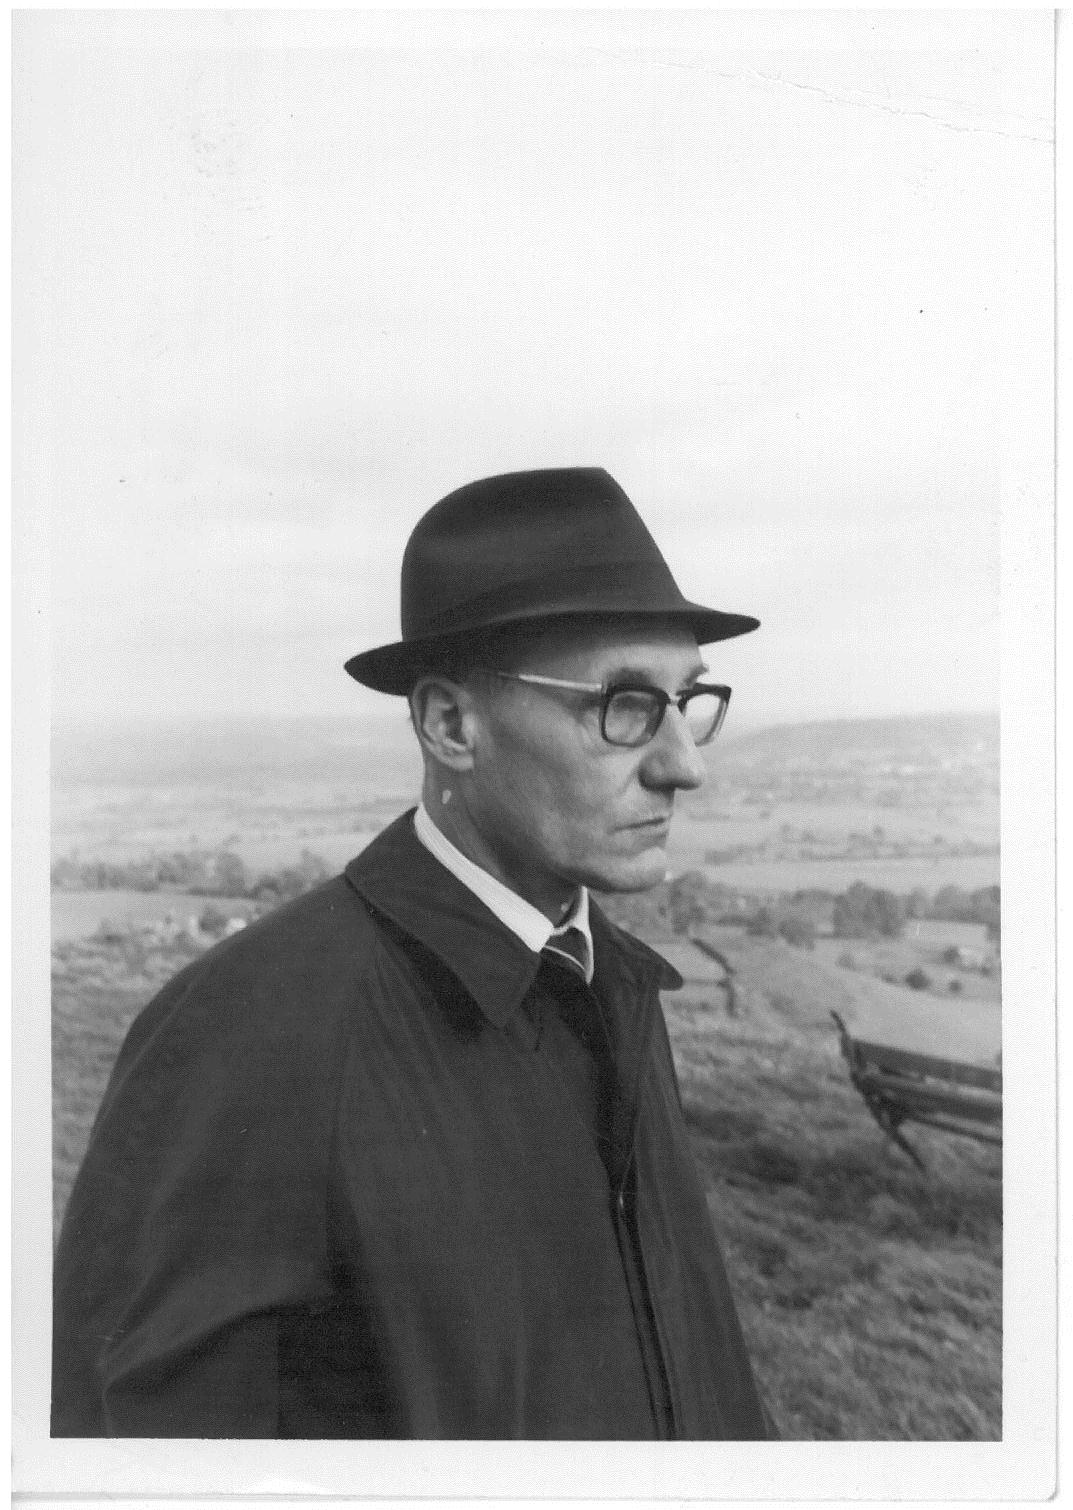 edwin morgan William S Burroughs 1960s